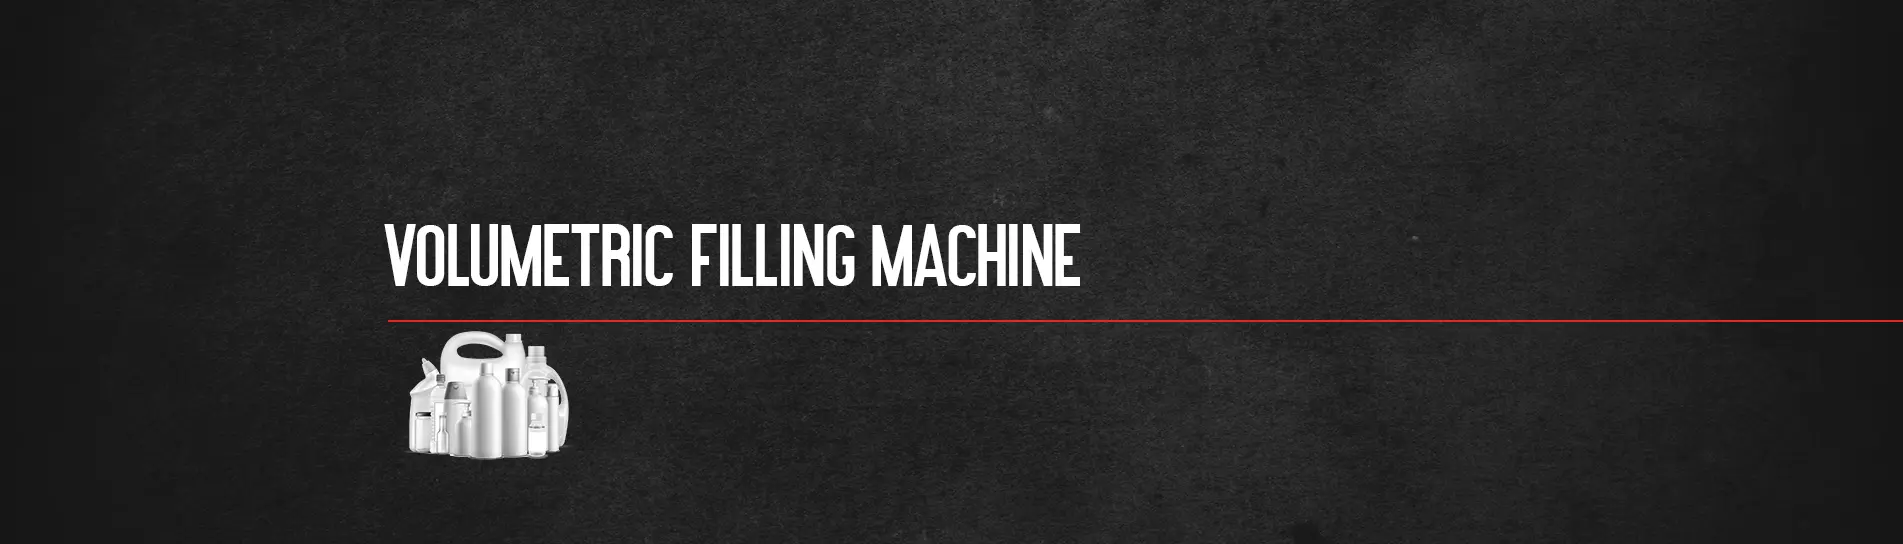 volumetric-filling-machine